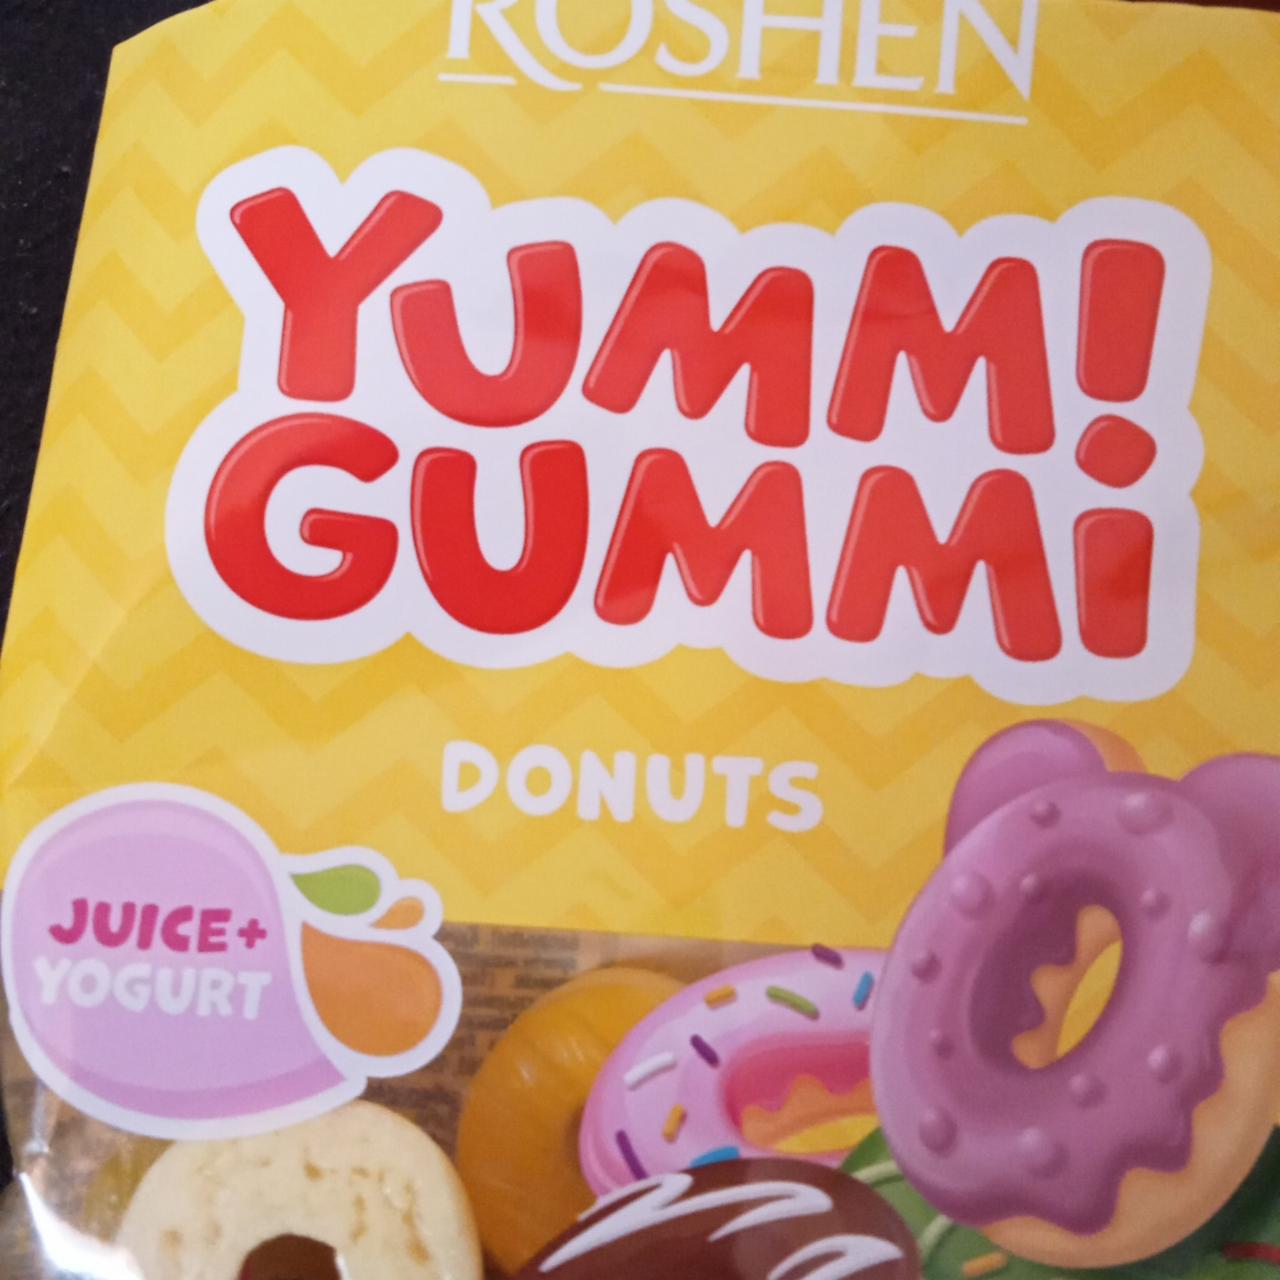 Fotografie - Yummi gummi donuts Roshen